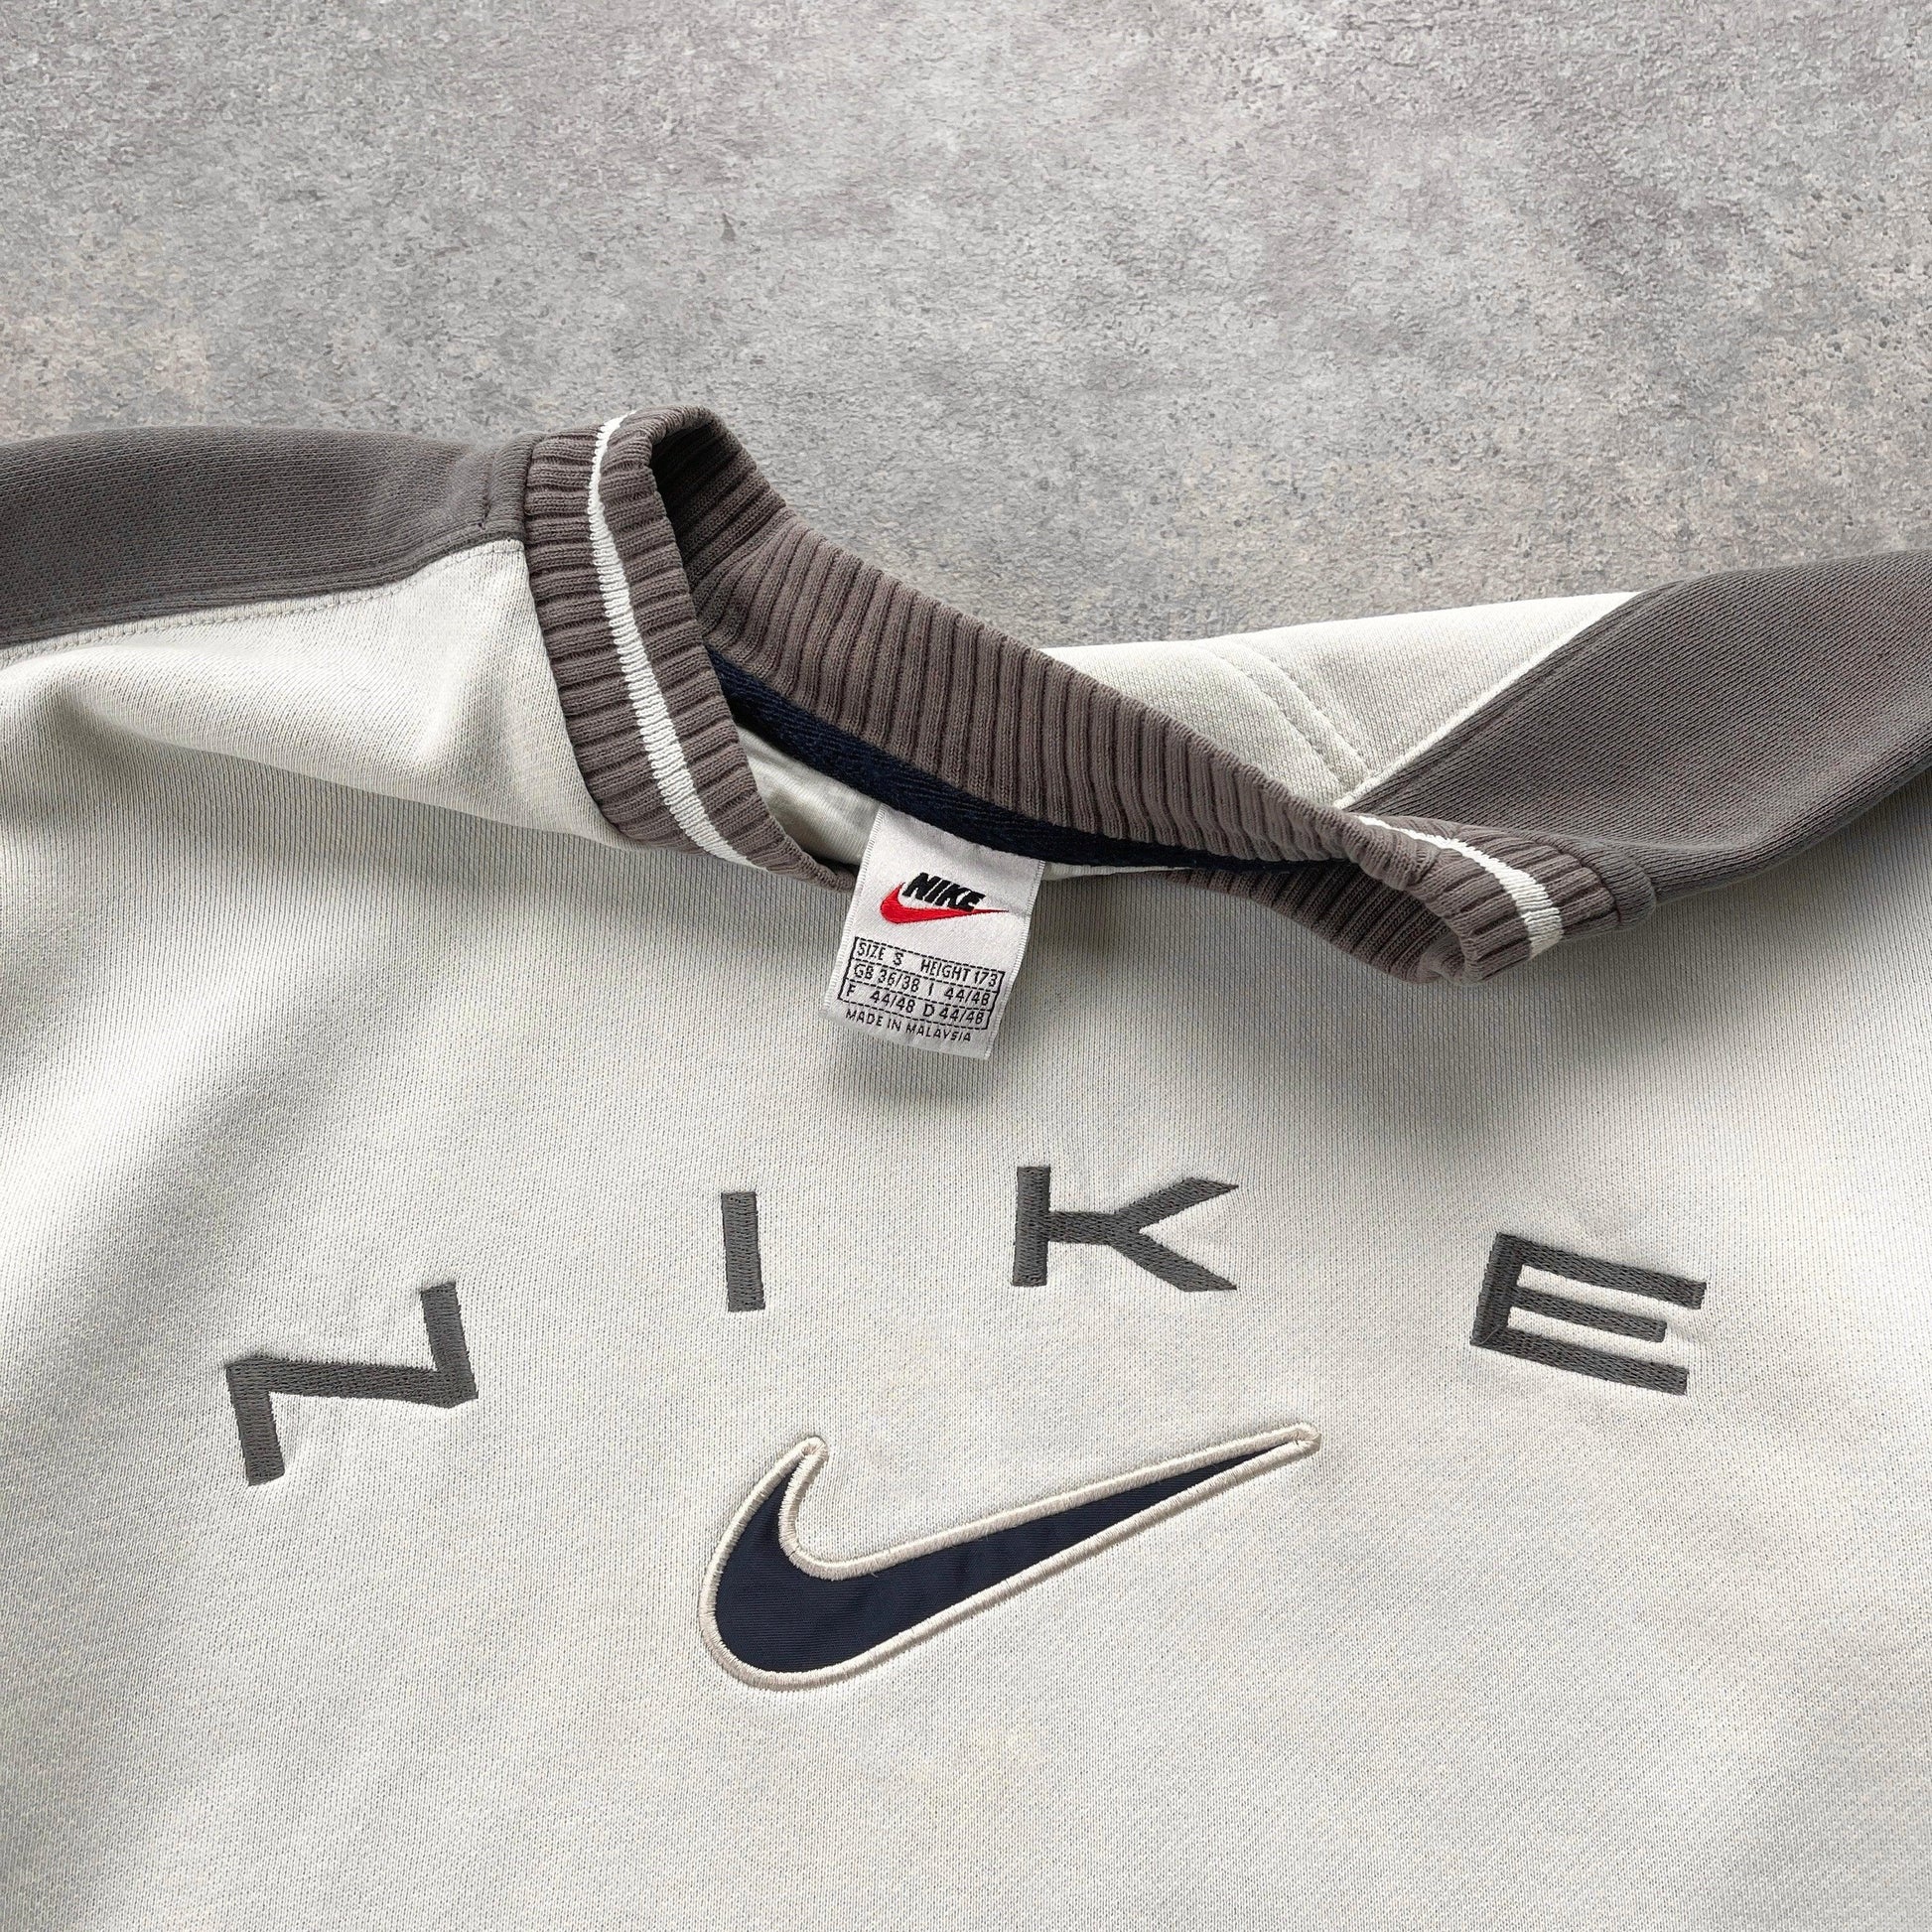 Nike RARE 1990s heavyweight embroidered sweatshirt (S) - Known Source